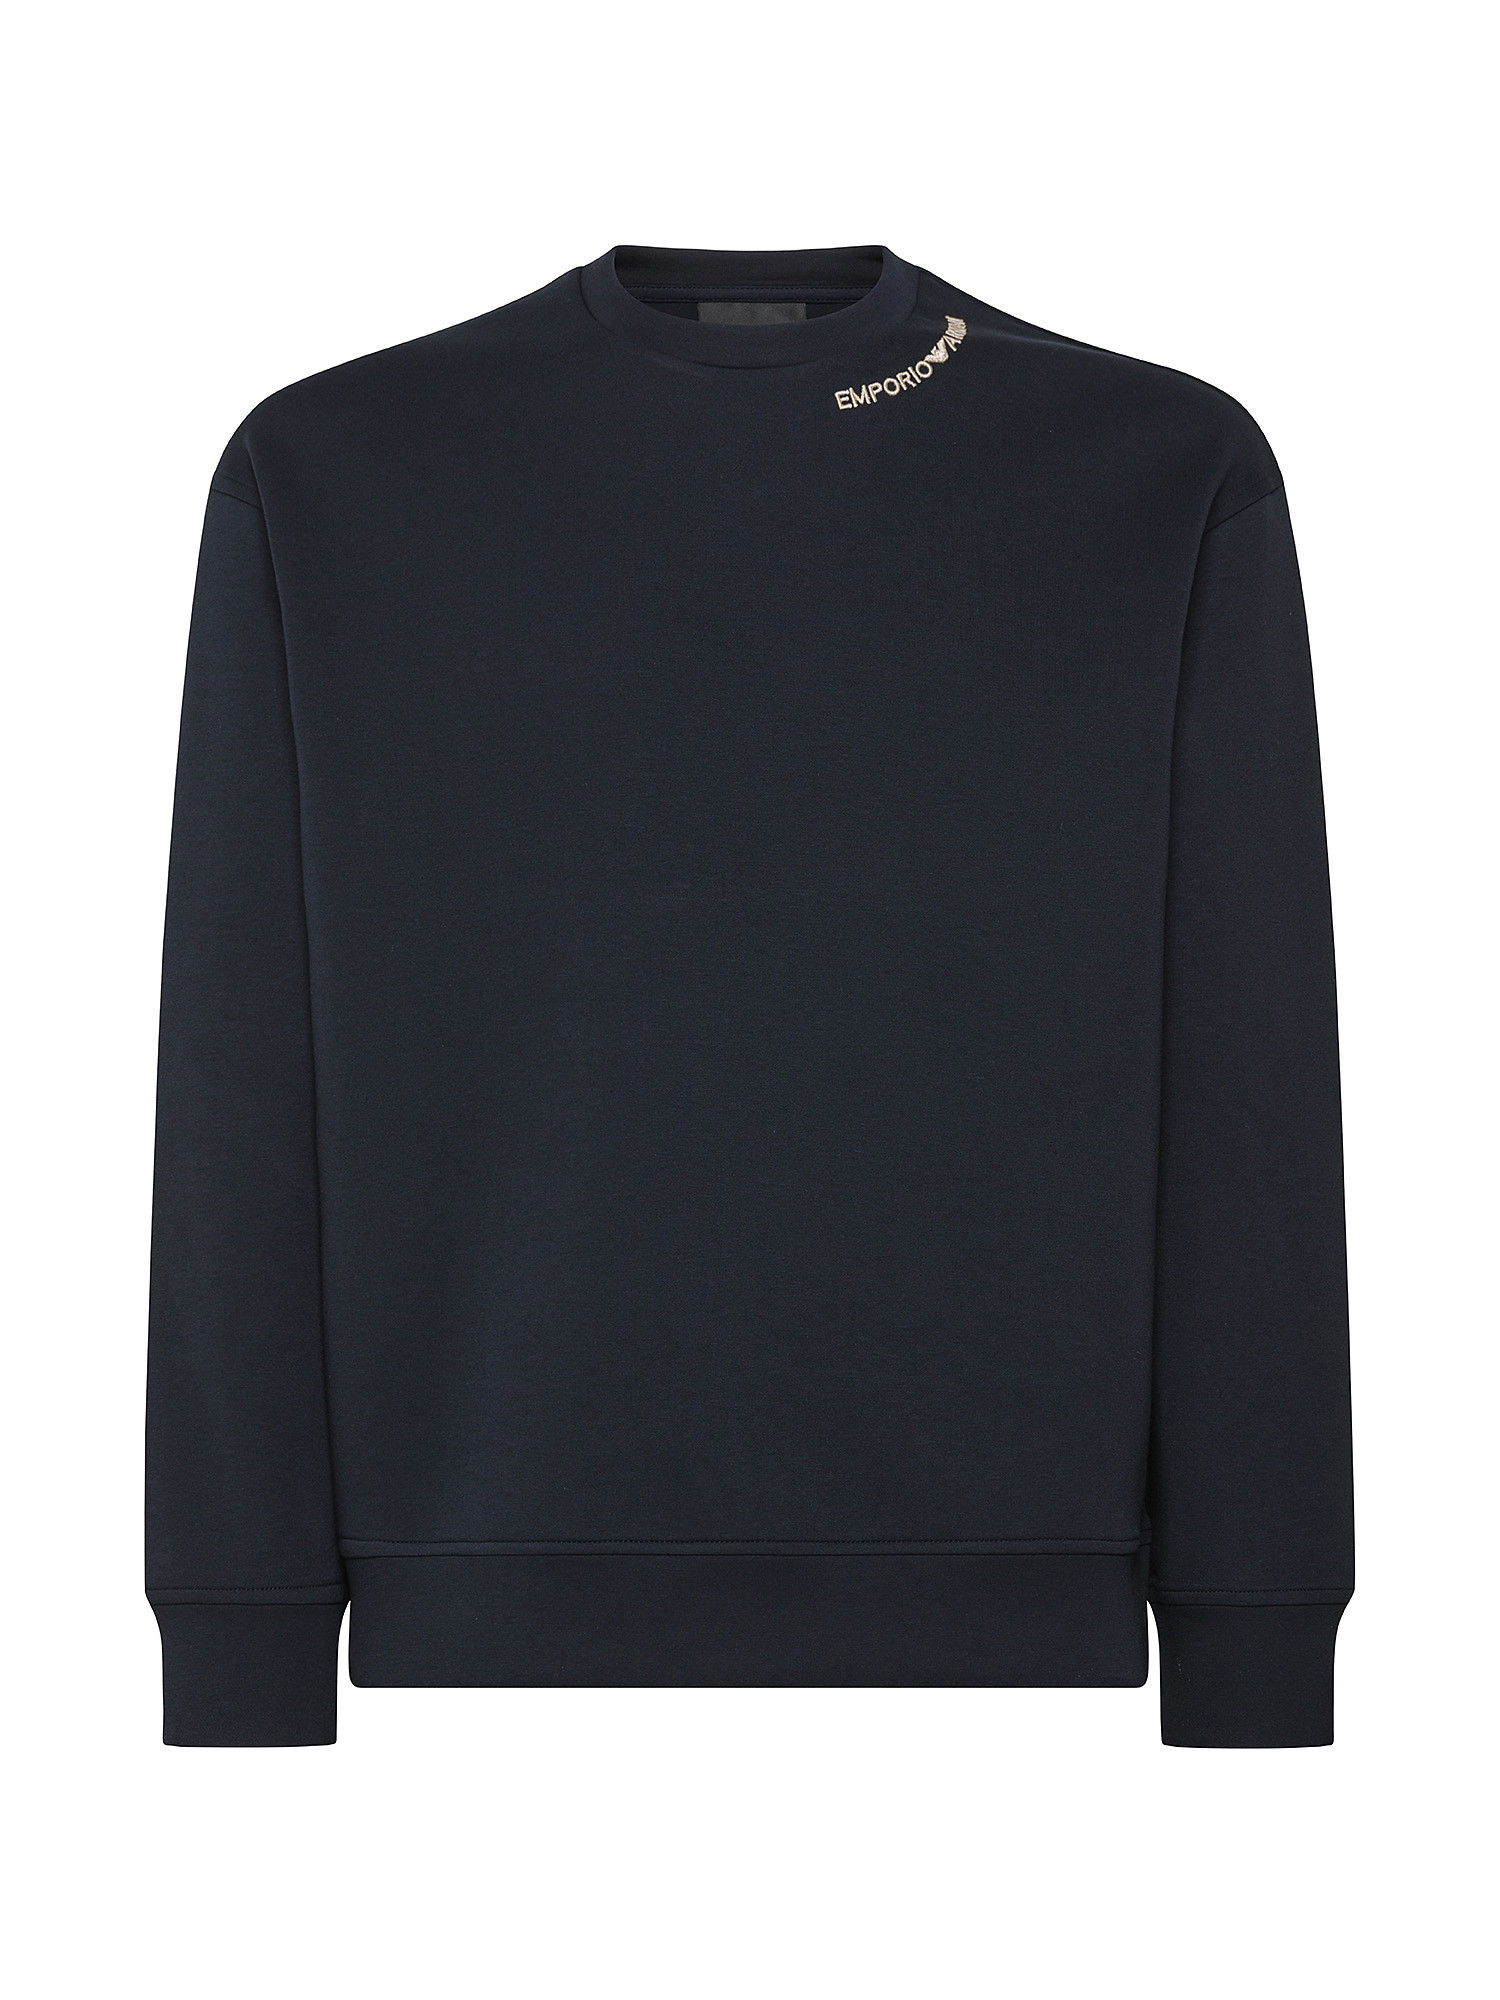 Emporio Armani - Sweatshirt with logo embroidery, Dark Blue, large image number 0